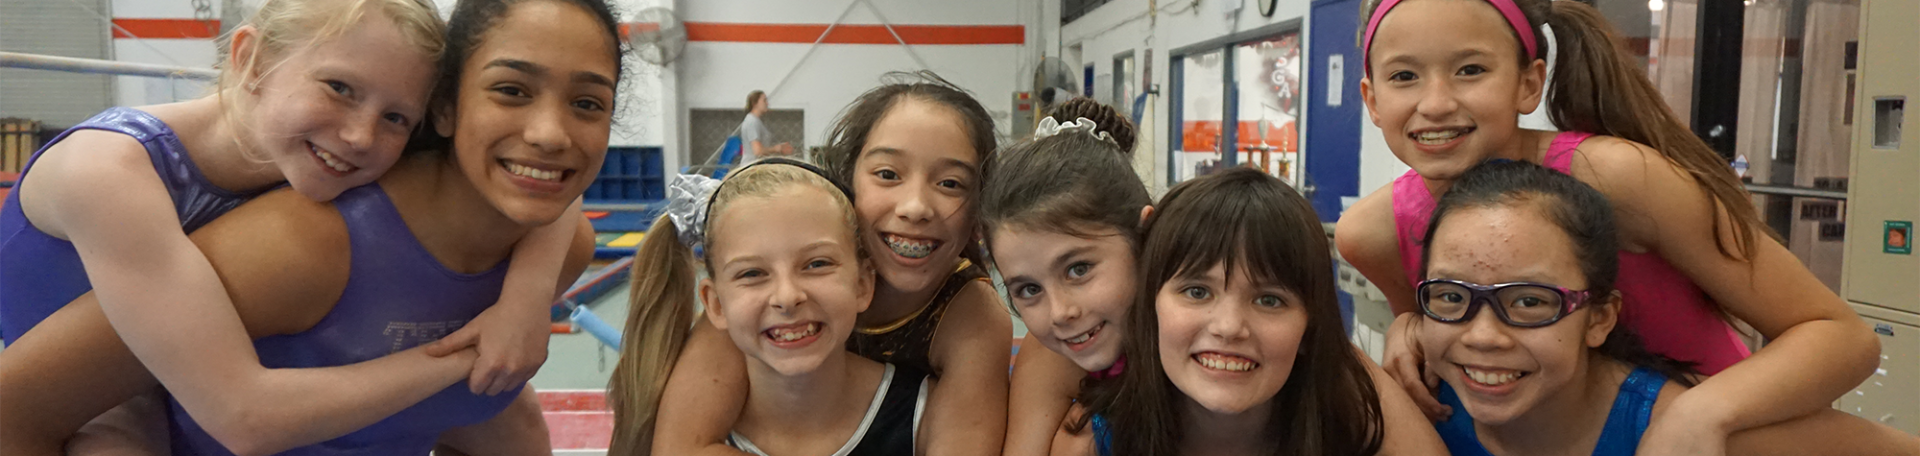 Happy Gymnast Girls